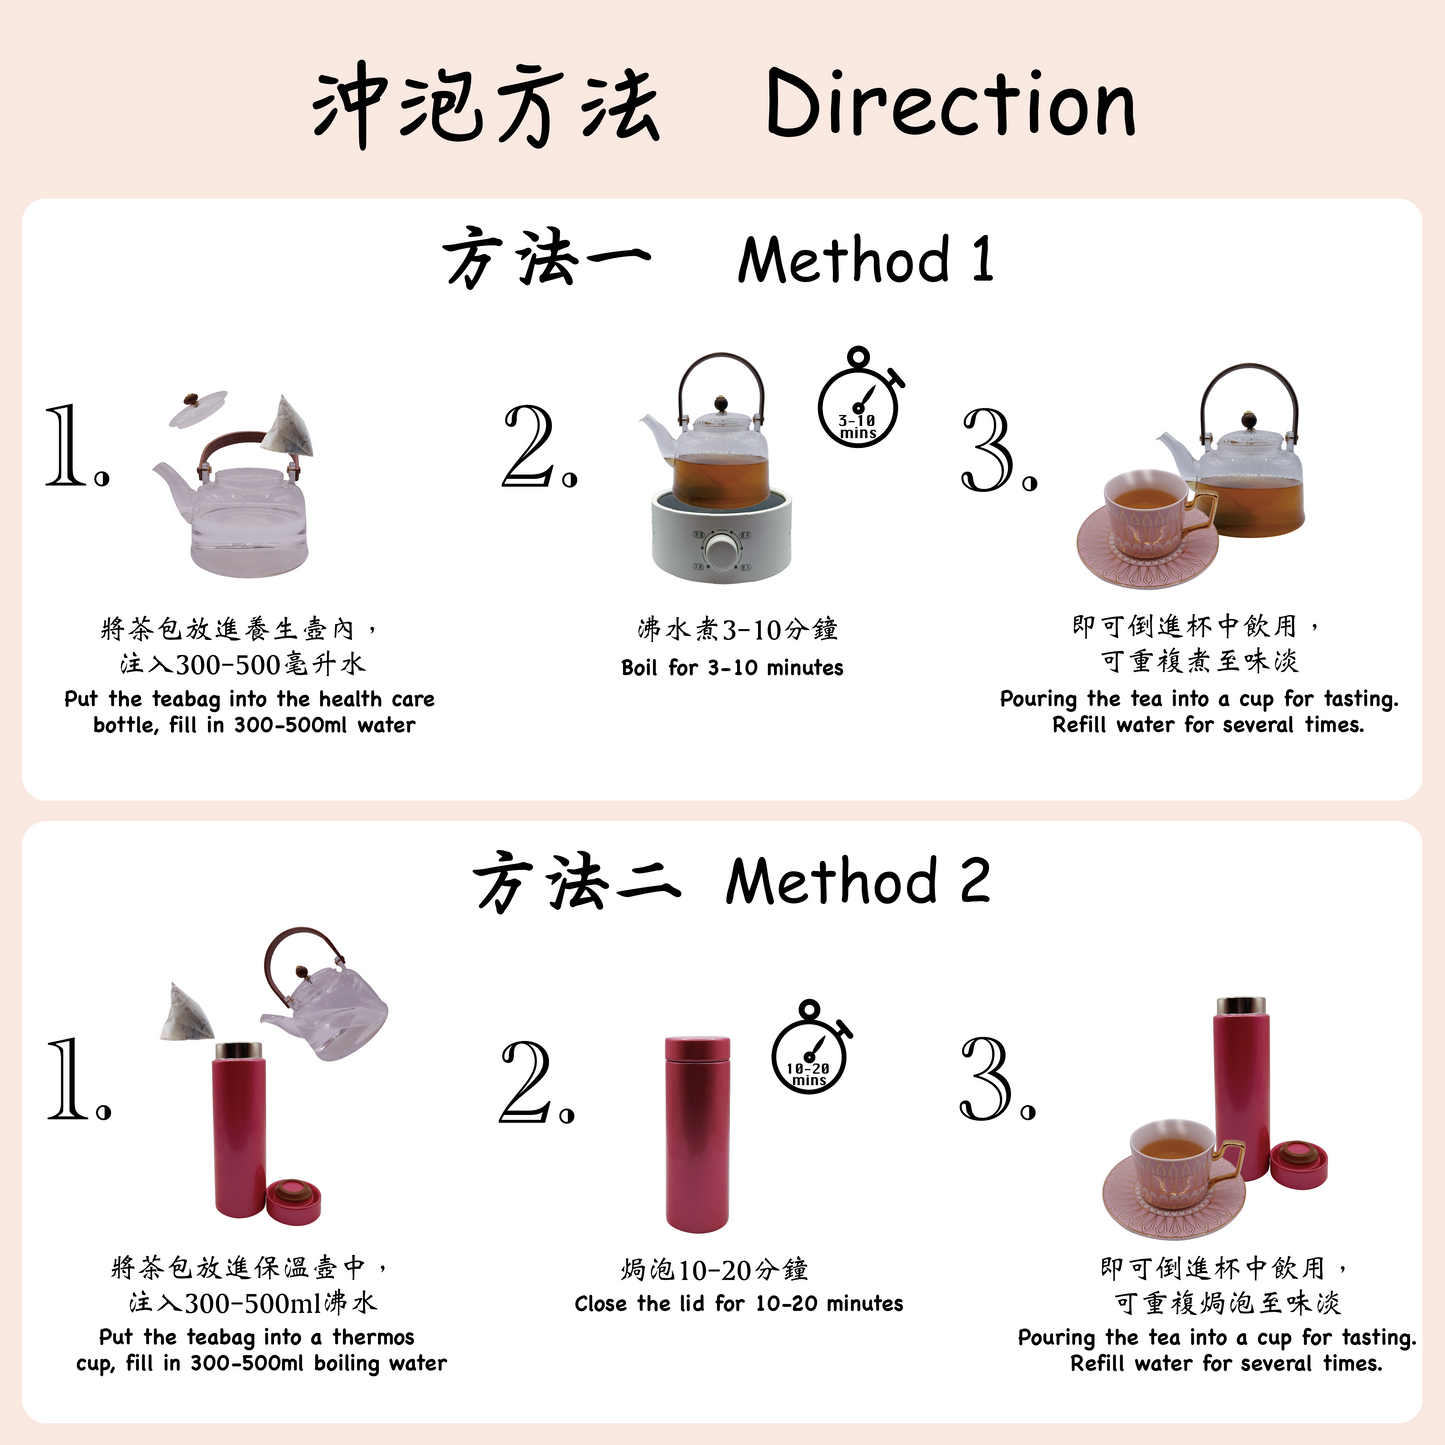 組合套裝 - 御皇茶 The Imperial Tea & 祛濕茶 Dampness Relieving Tea